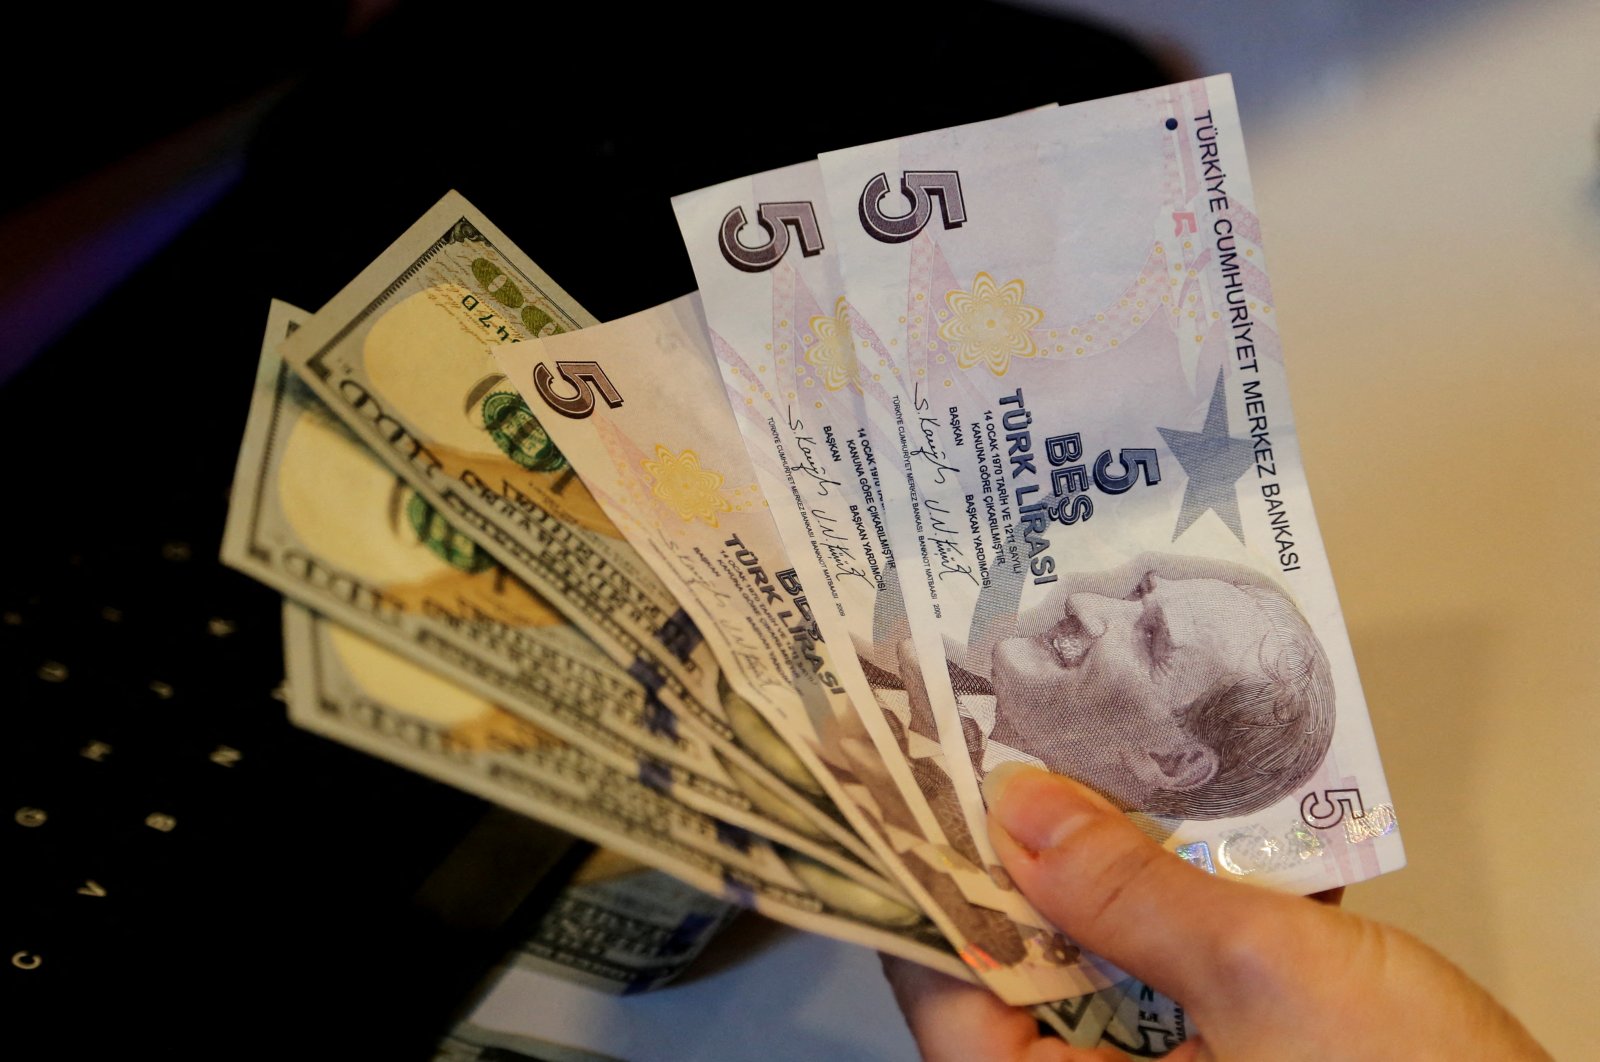 Kementerian mengungkapkan rincian skema lira yang dilindungi FX Turki